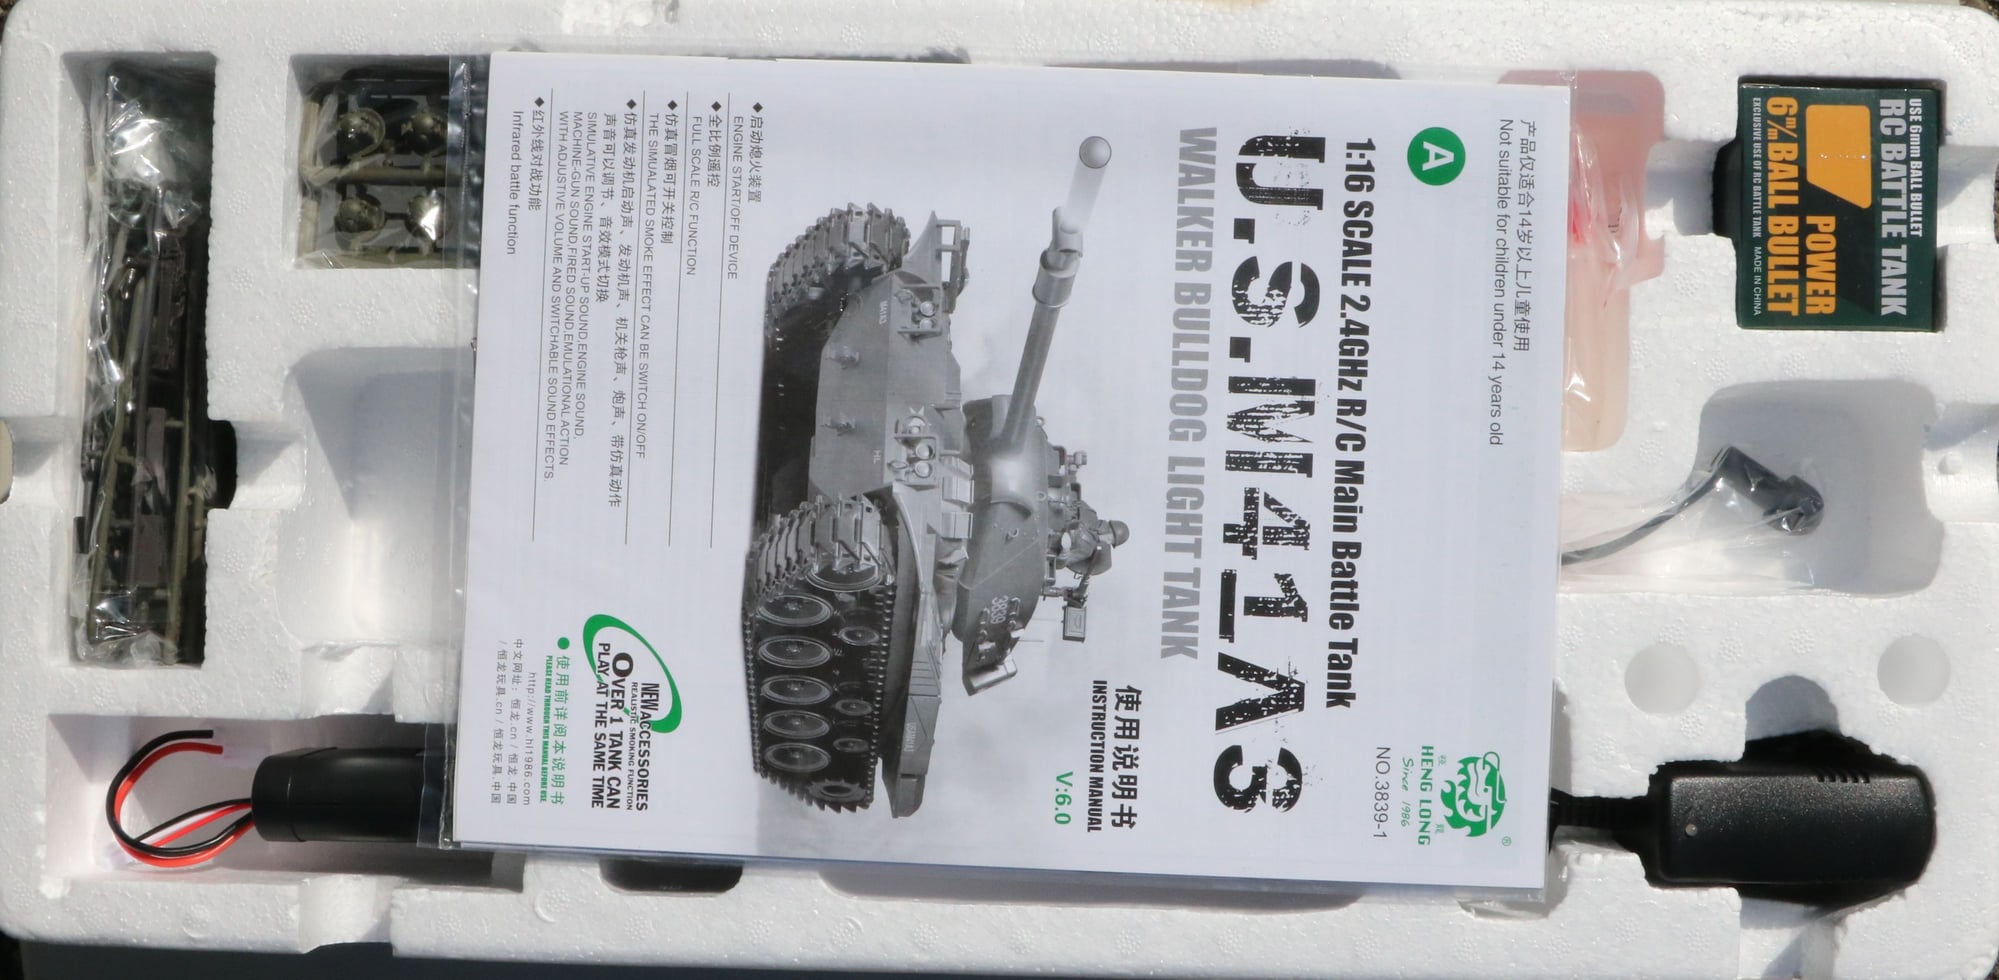 Henglong 1:16 M41A3 WALKER BULLDOG 6.0S RC Tank Steel Gearbox IR and Airsoft 